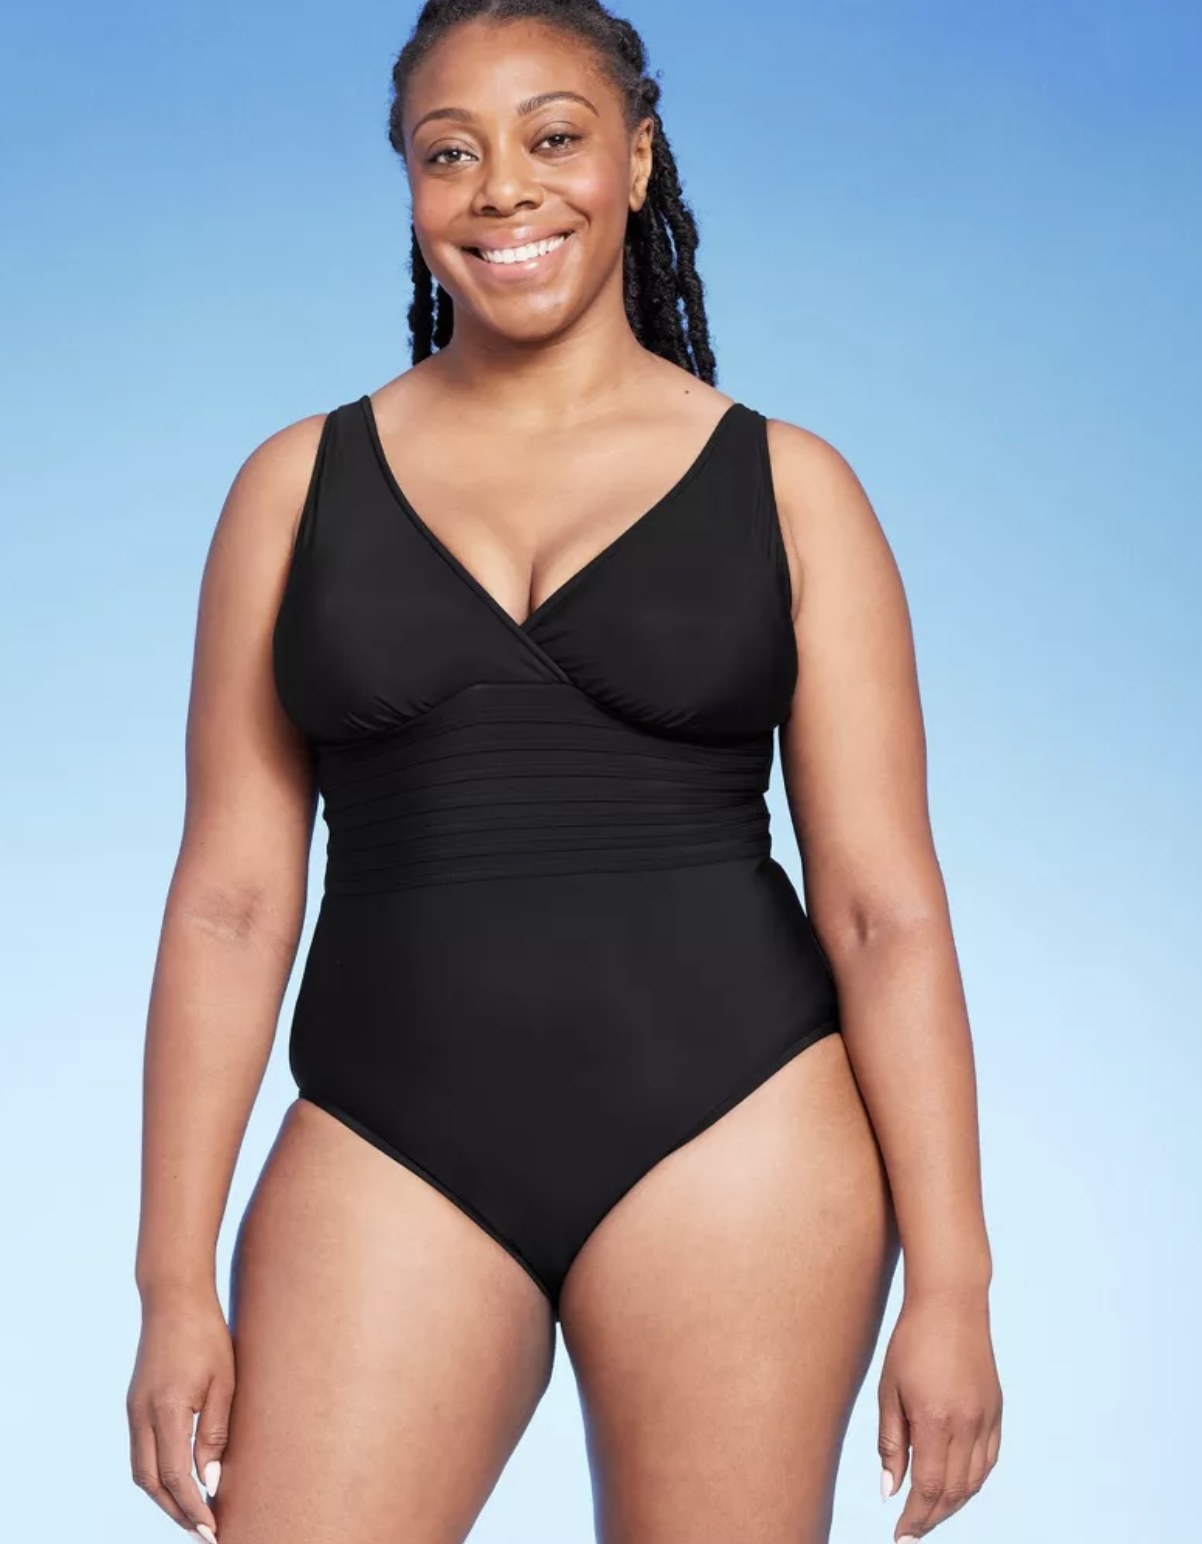 a model wearing the bathing suit in black